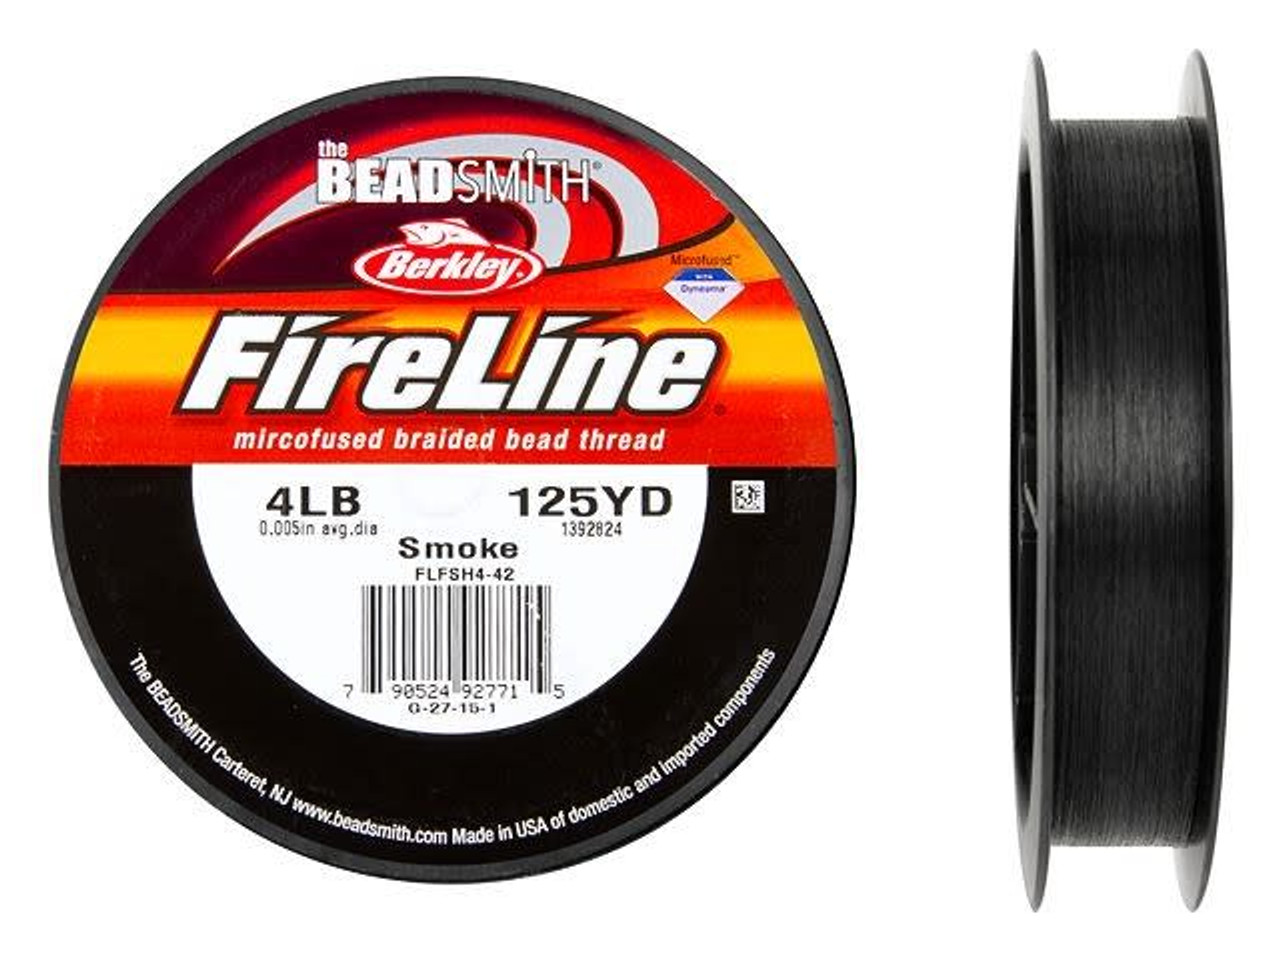 Fireline Crystal Braid 125yds - Discount Fishing Tackle